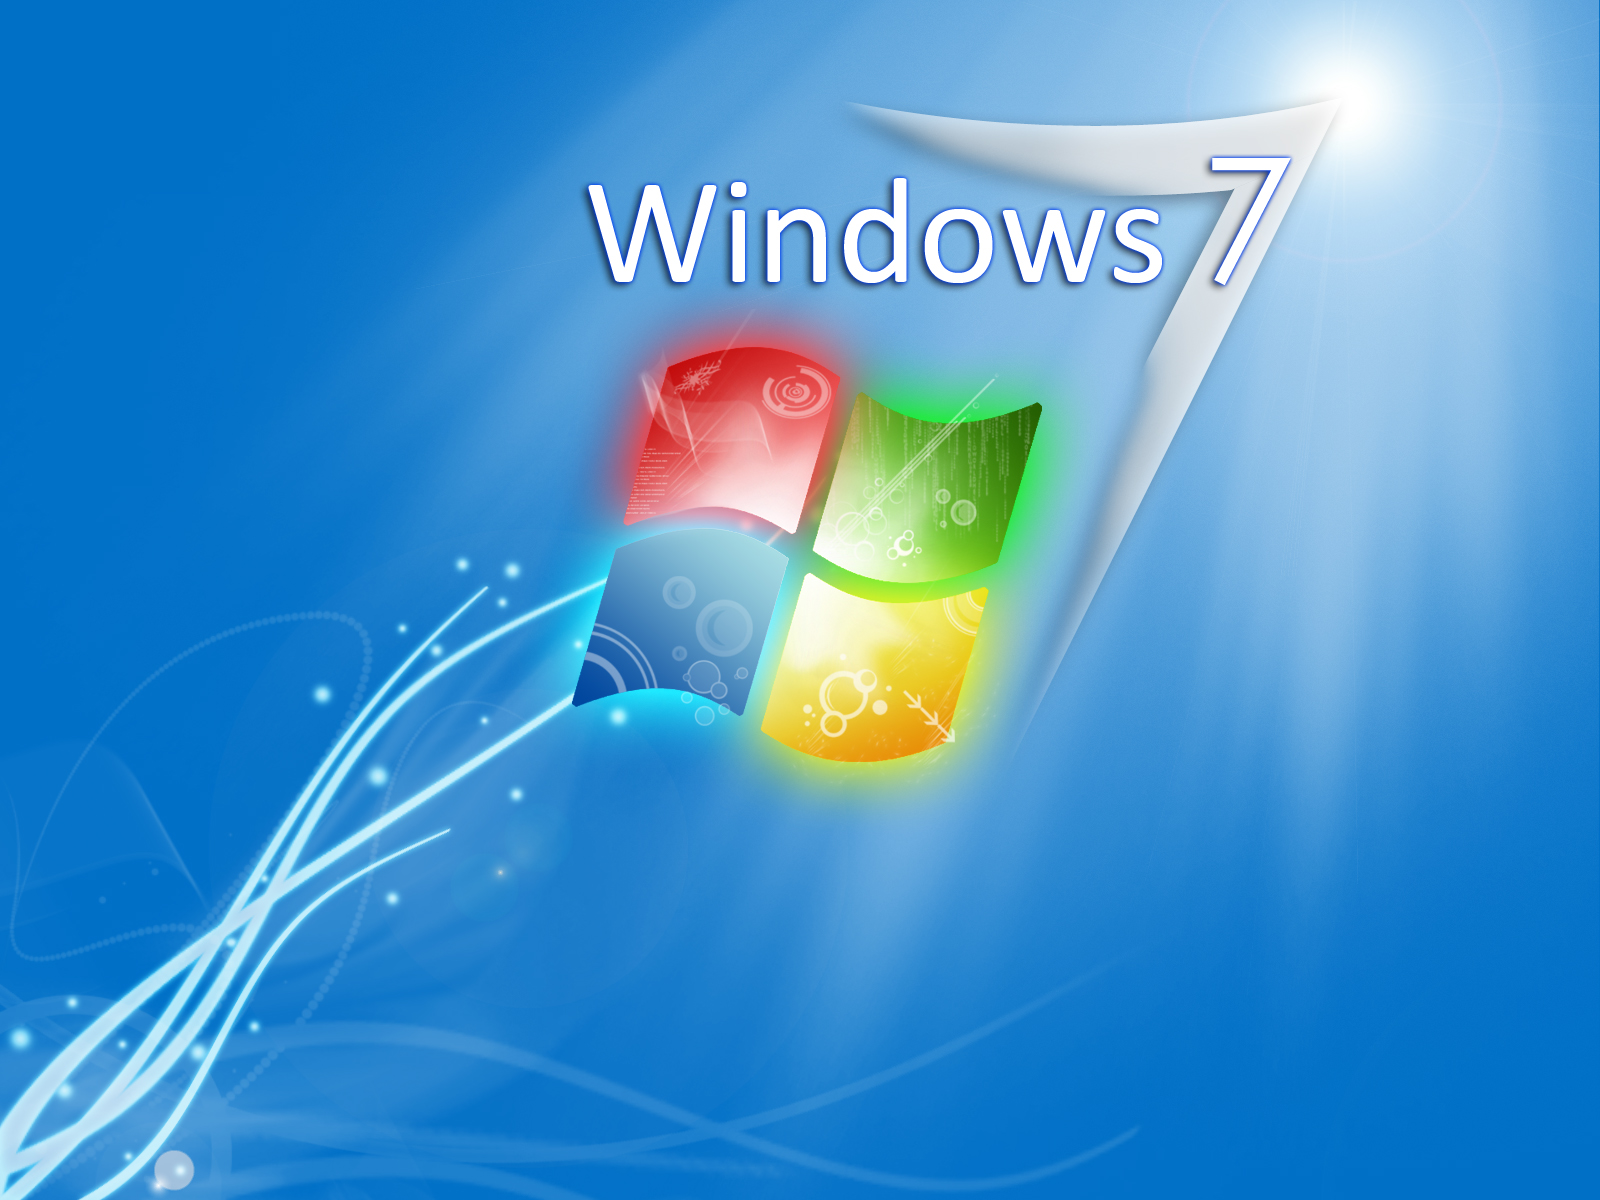 http://3.bp.blogspot.com/-LCSKjZrATm8/UNVfrxI5miI/AAAAAAAABM0/maoMzDNVfIM/s1600/Windows-7-wallpapers-HD-win-7-desktop-background.jpg